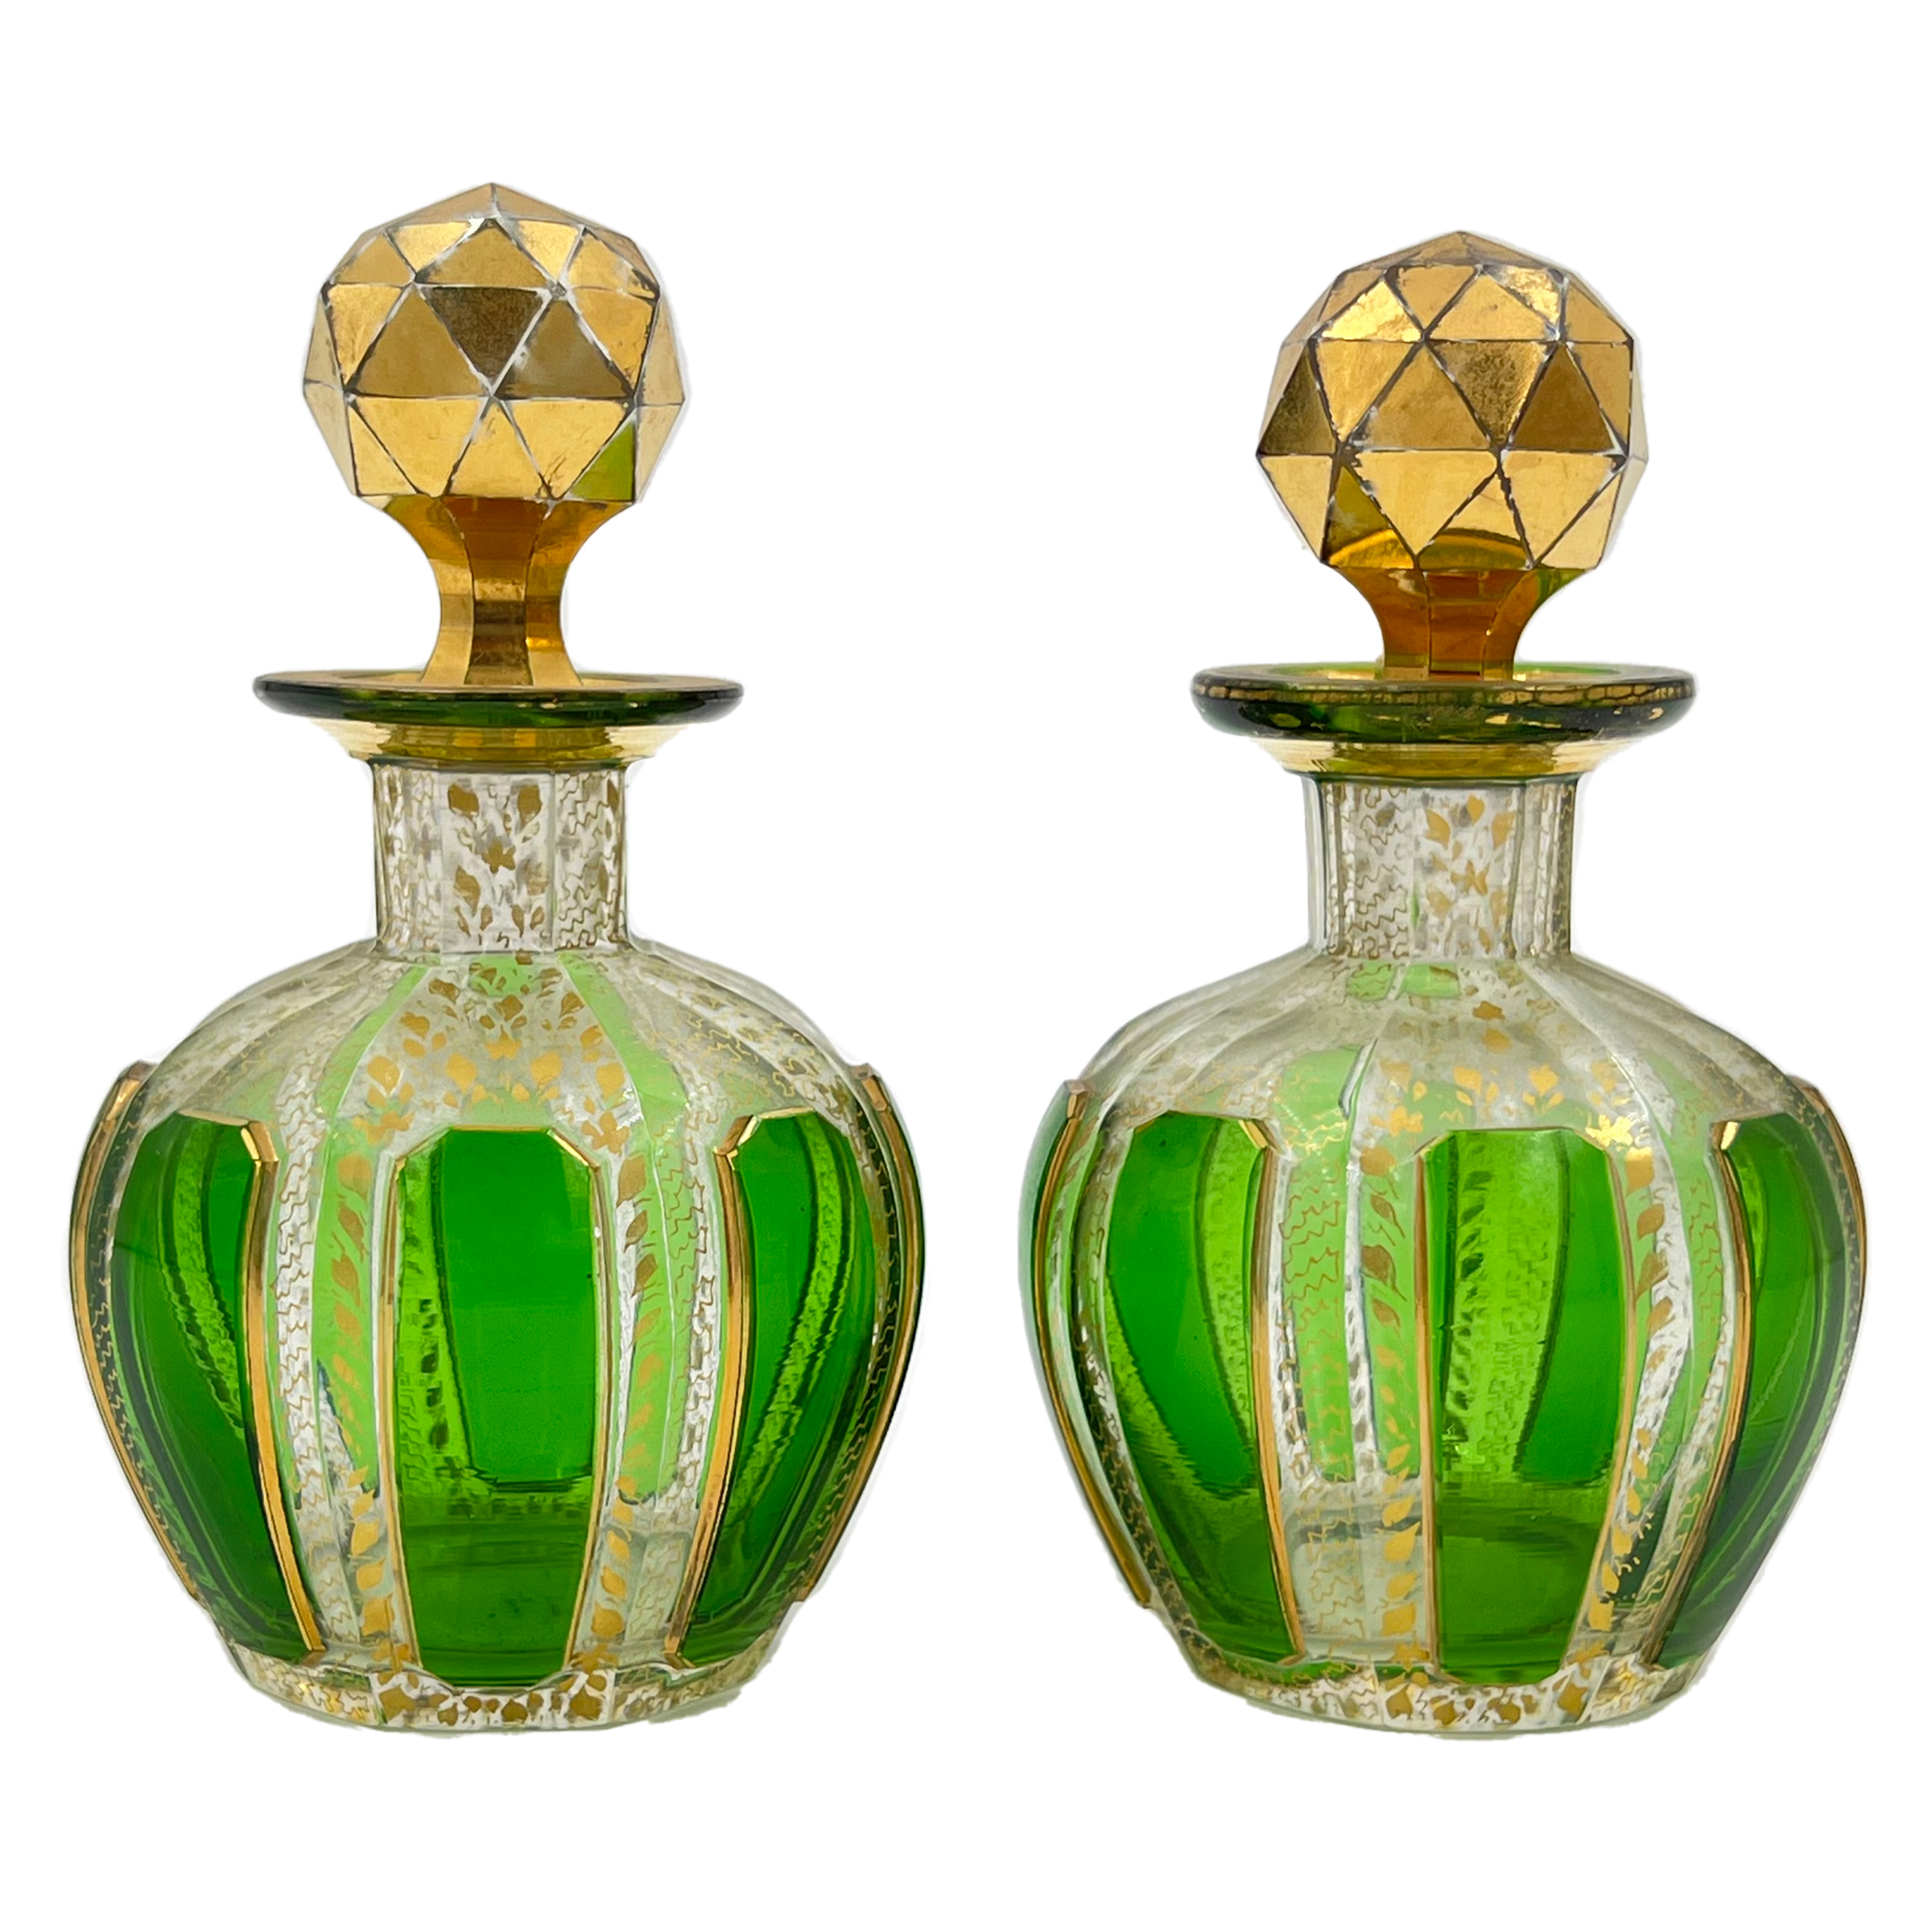 PAIR OF GREEN BOHEMIAN GLASS PERFUME BOTTLES